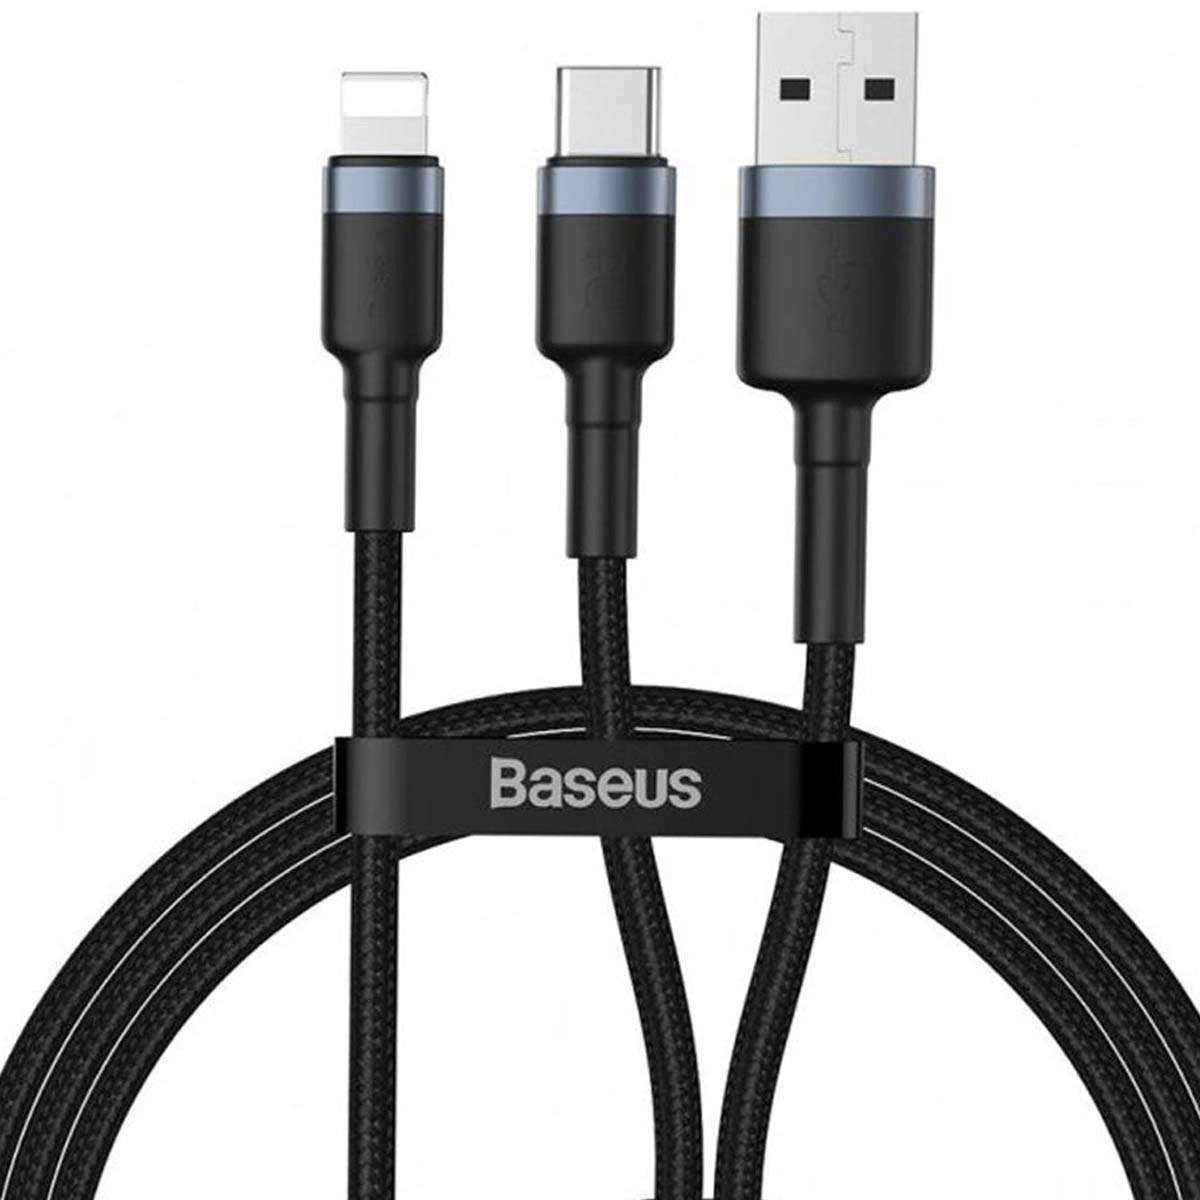 Кабель Baseus 2 in 1 USB, USB Type C на APPLE Lightning 8 pin, 18W, 2.4А, длина 1.2 метра, цвет черно серый